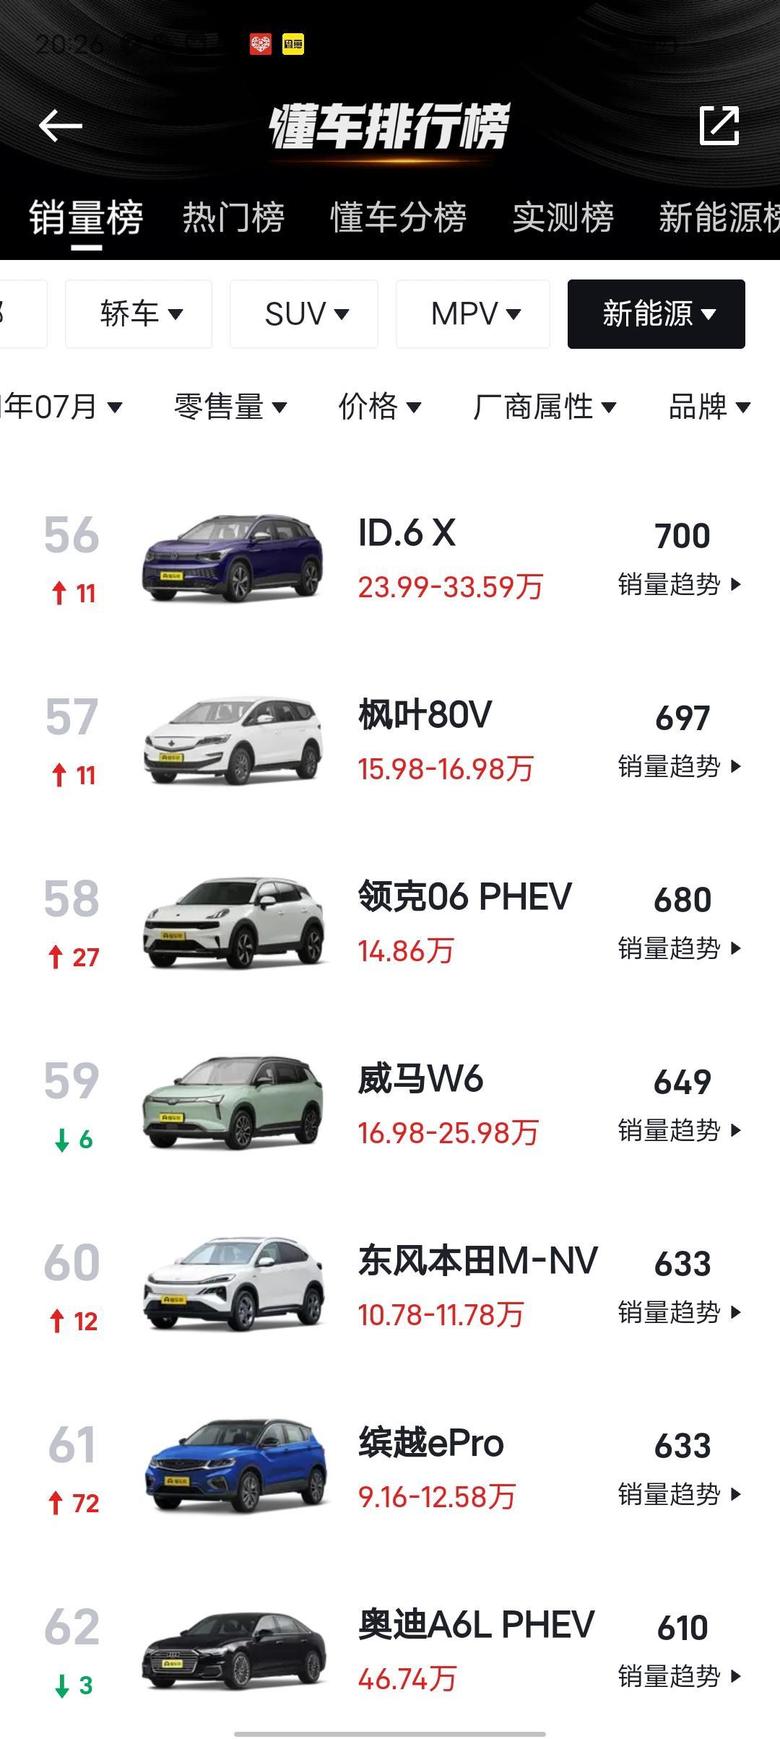 ID.6X刚上市没多久就卖了700唐EV才卖200多是不是AIONV车也不错啊卖了2000多台我看了看北京买AIONV的居多啊价格还便宜不少有点动摇了